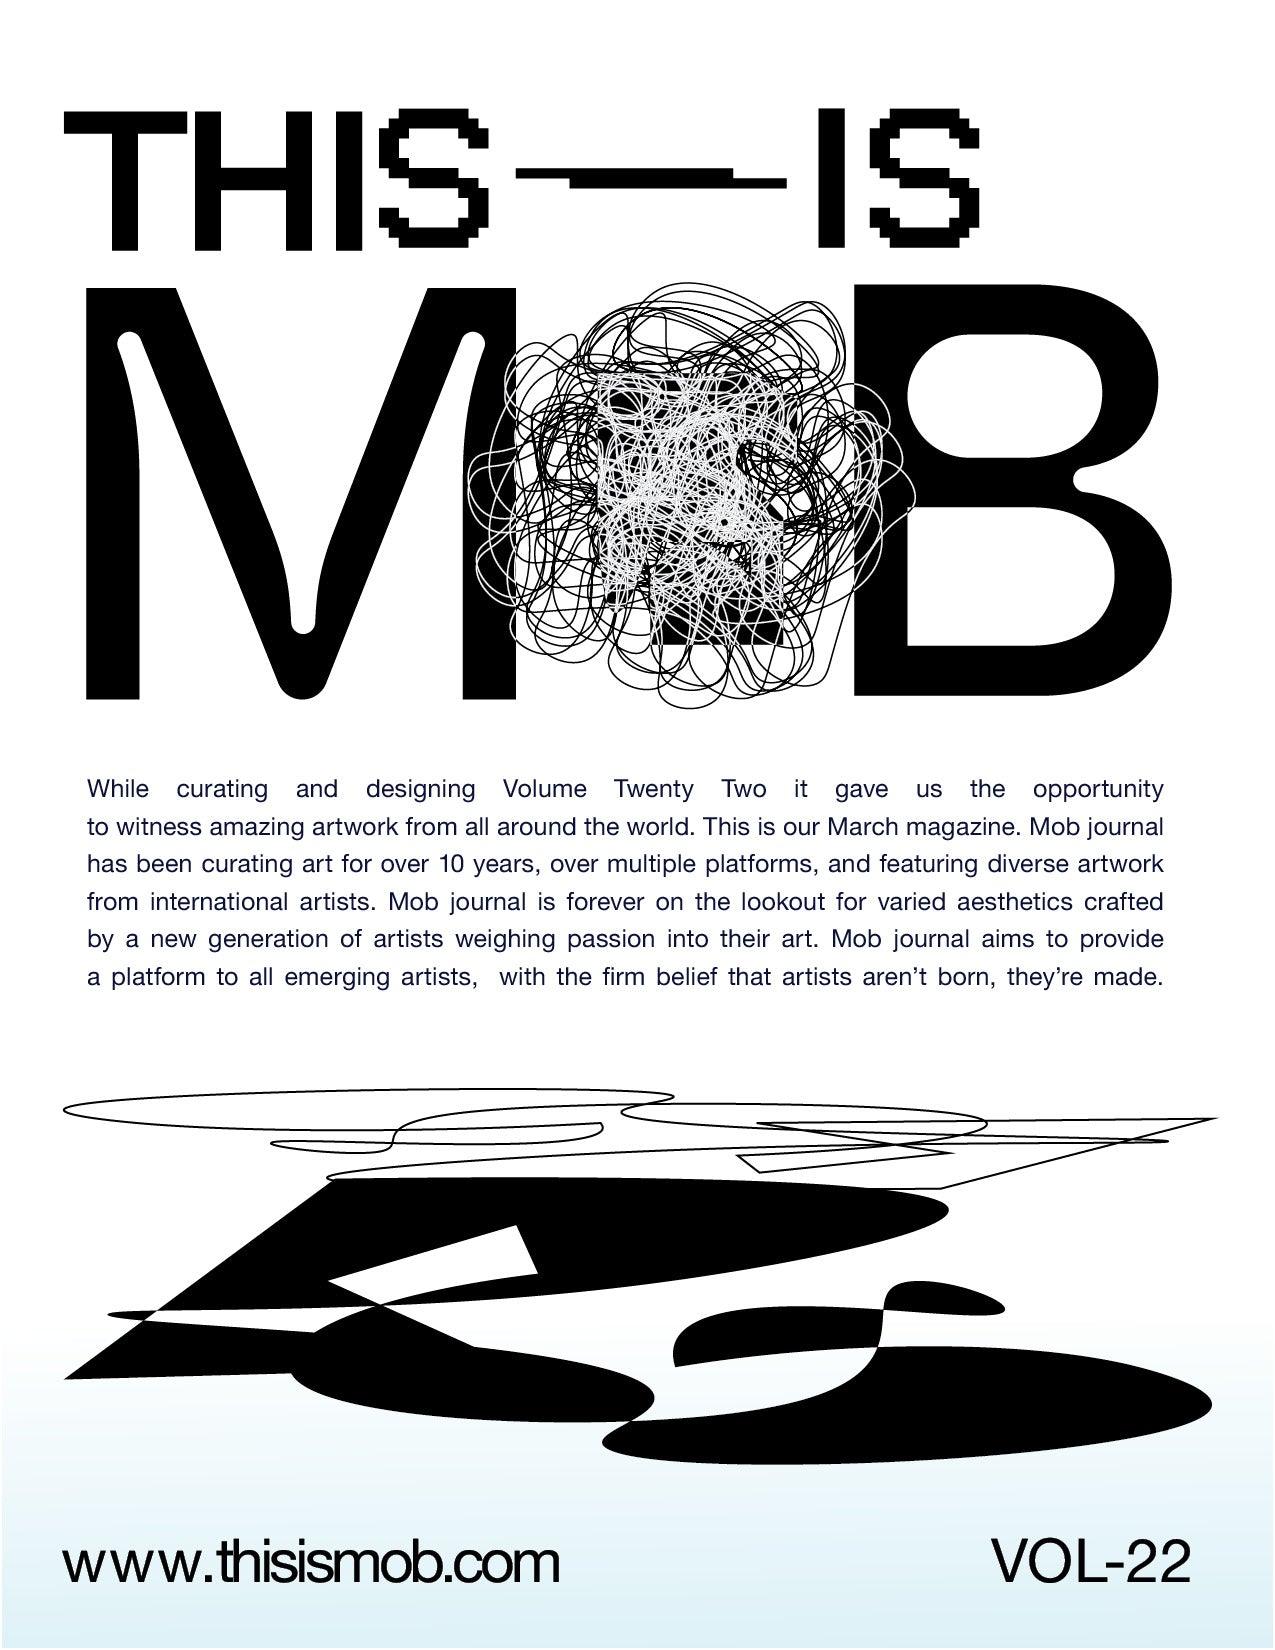 MOB JOURNAL | VOLUME TWENTY TWO | ISSUE #02 - Mob Journal